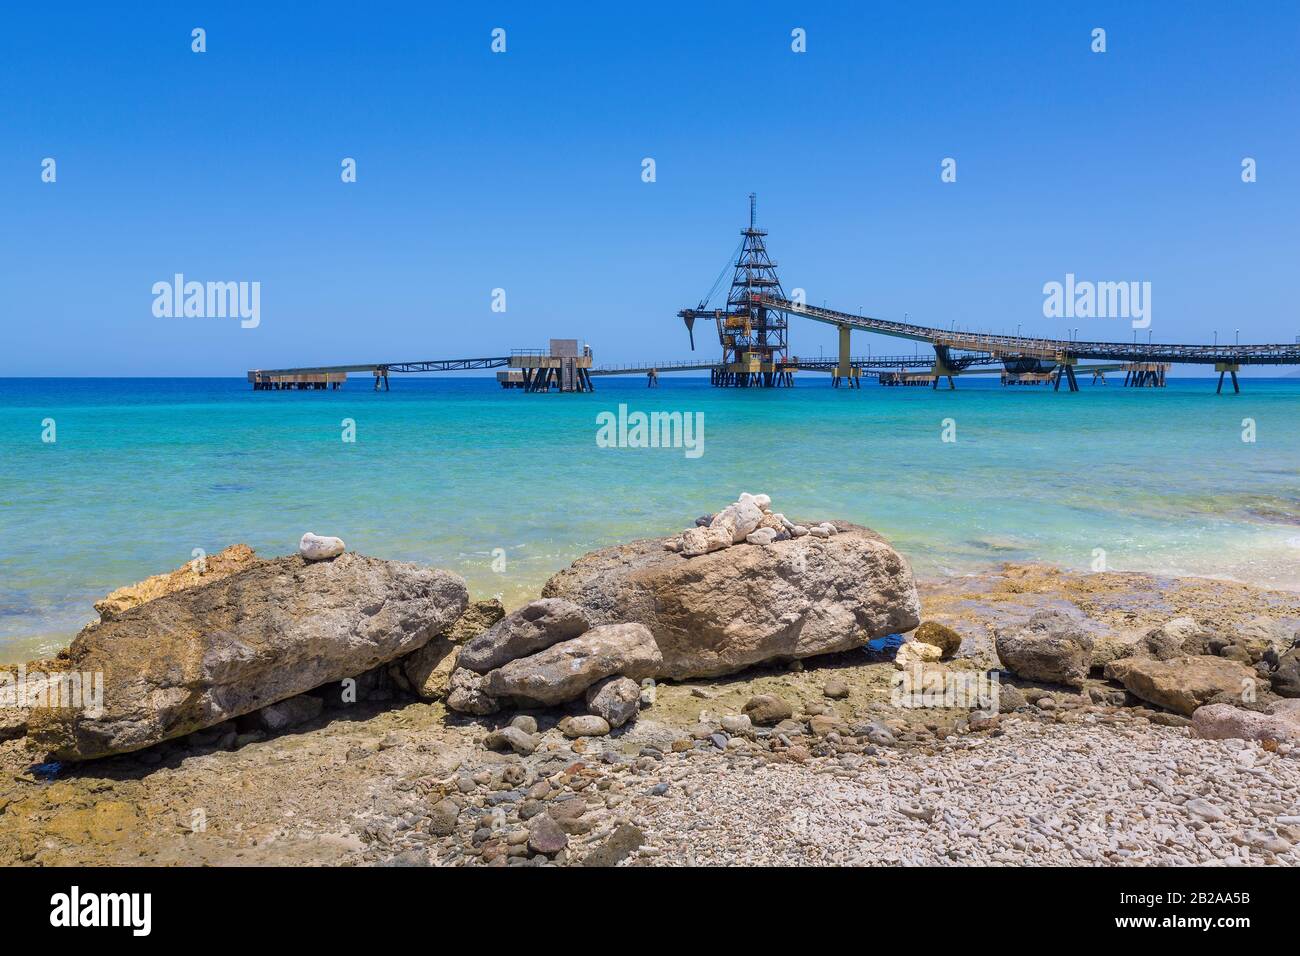 Salt Pier and rocks at sea of island Bonaire Stock Photo